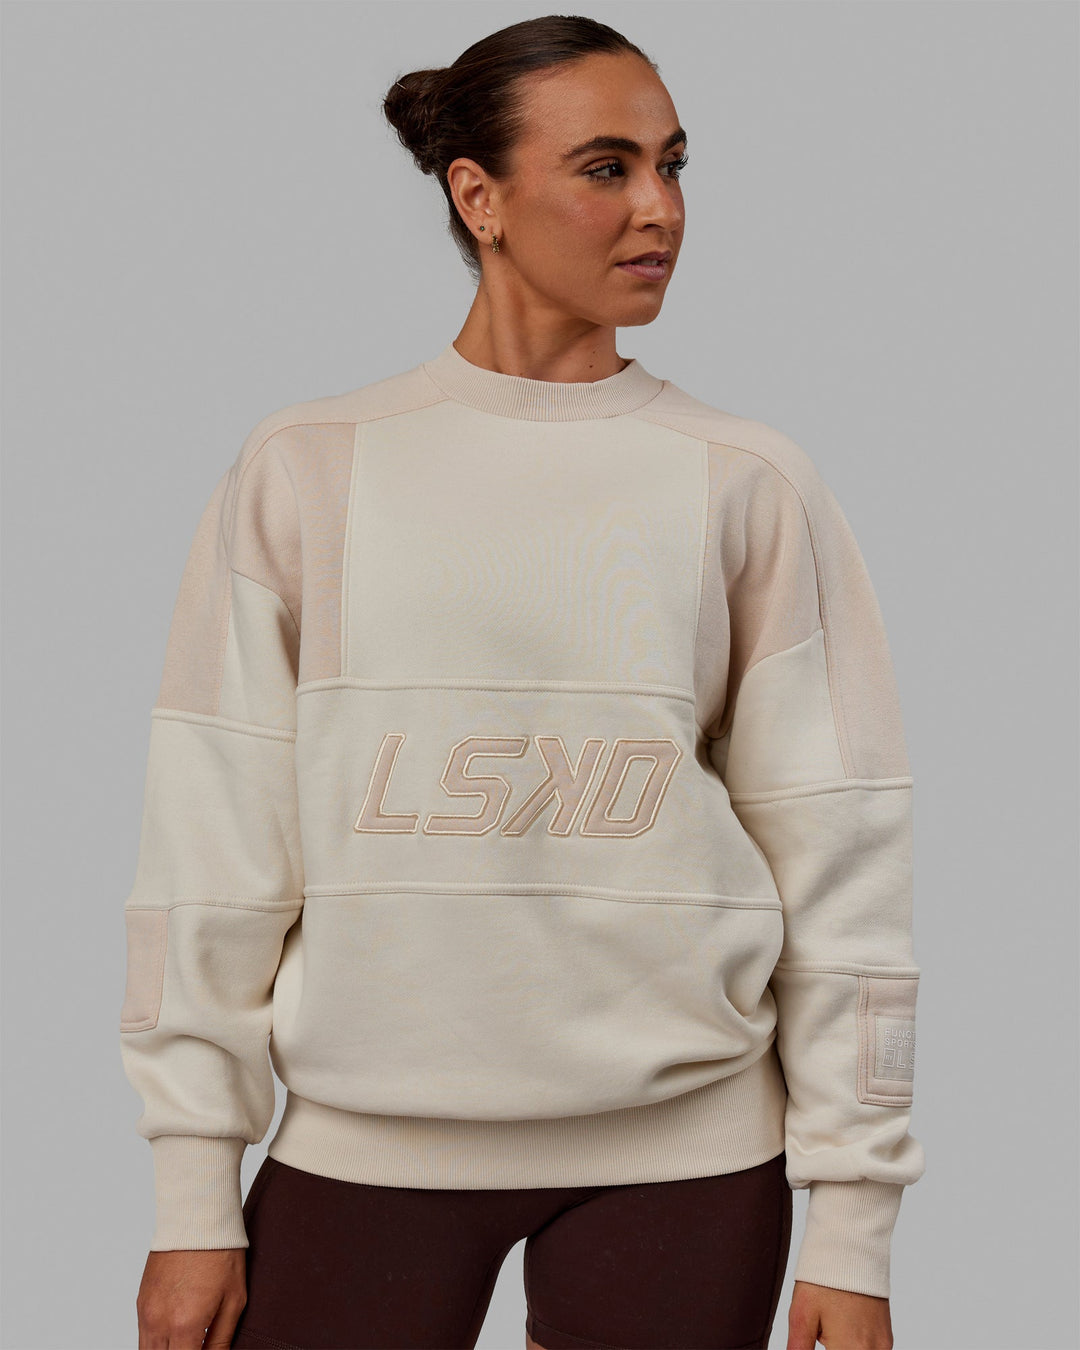 Woman wearing Unisex Slam Sweater Oversize - Bone-Pumice Stone